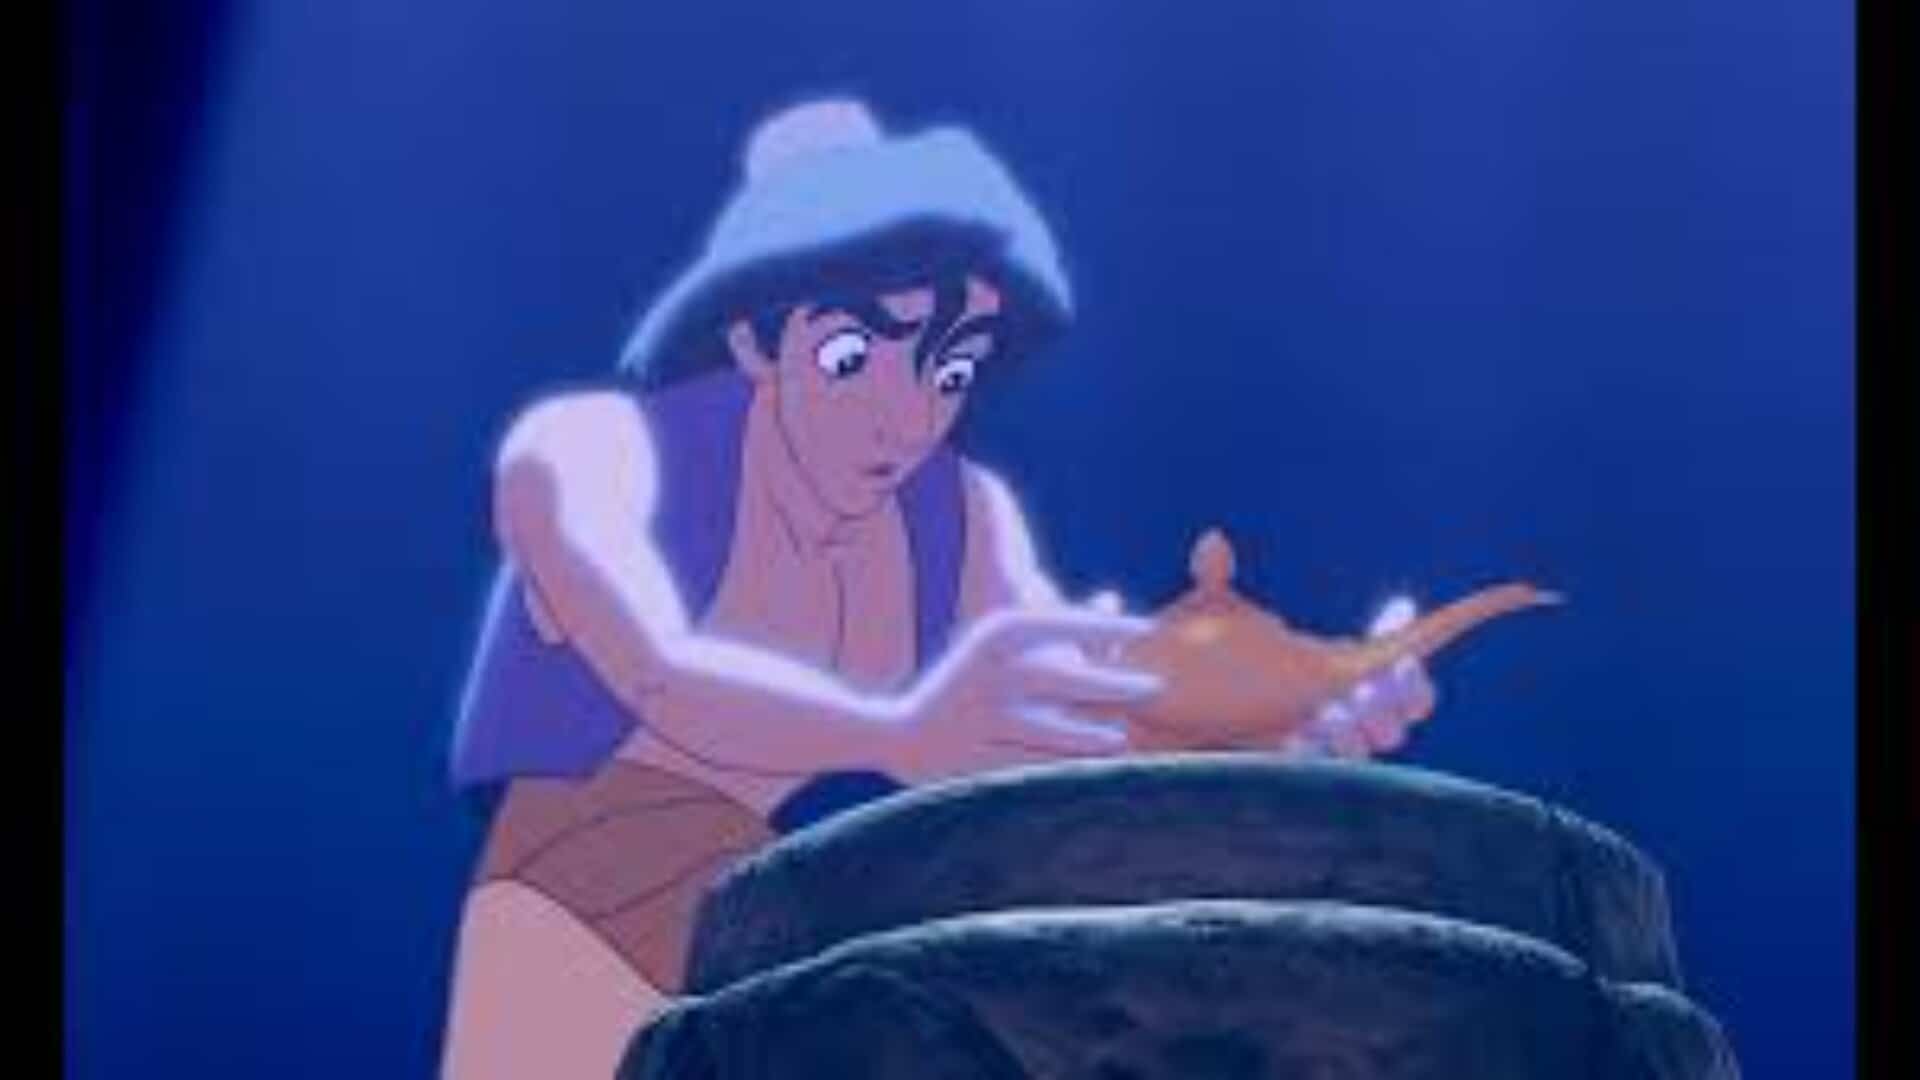 Aladdin summons the genie